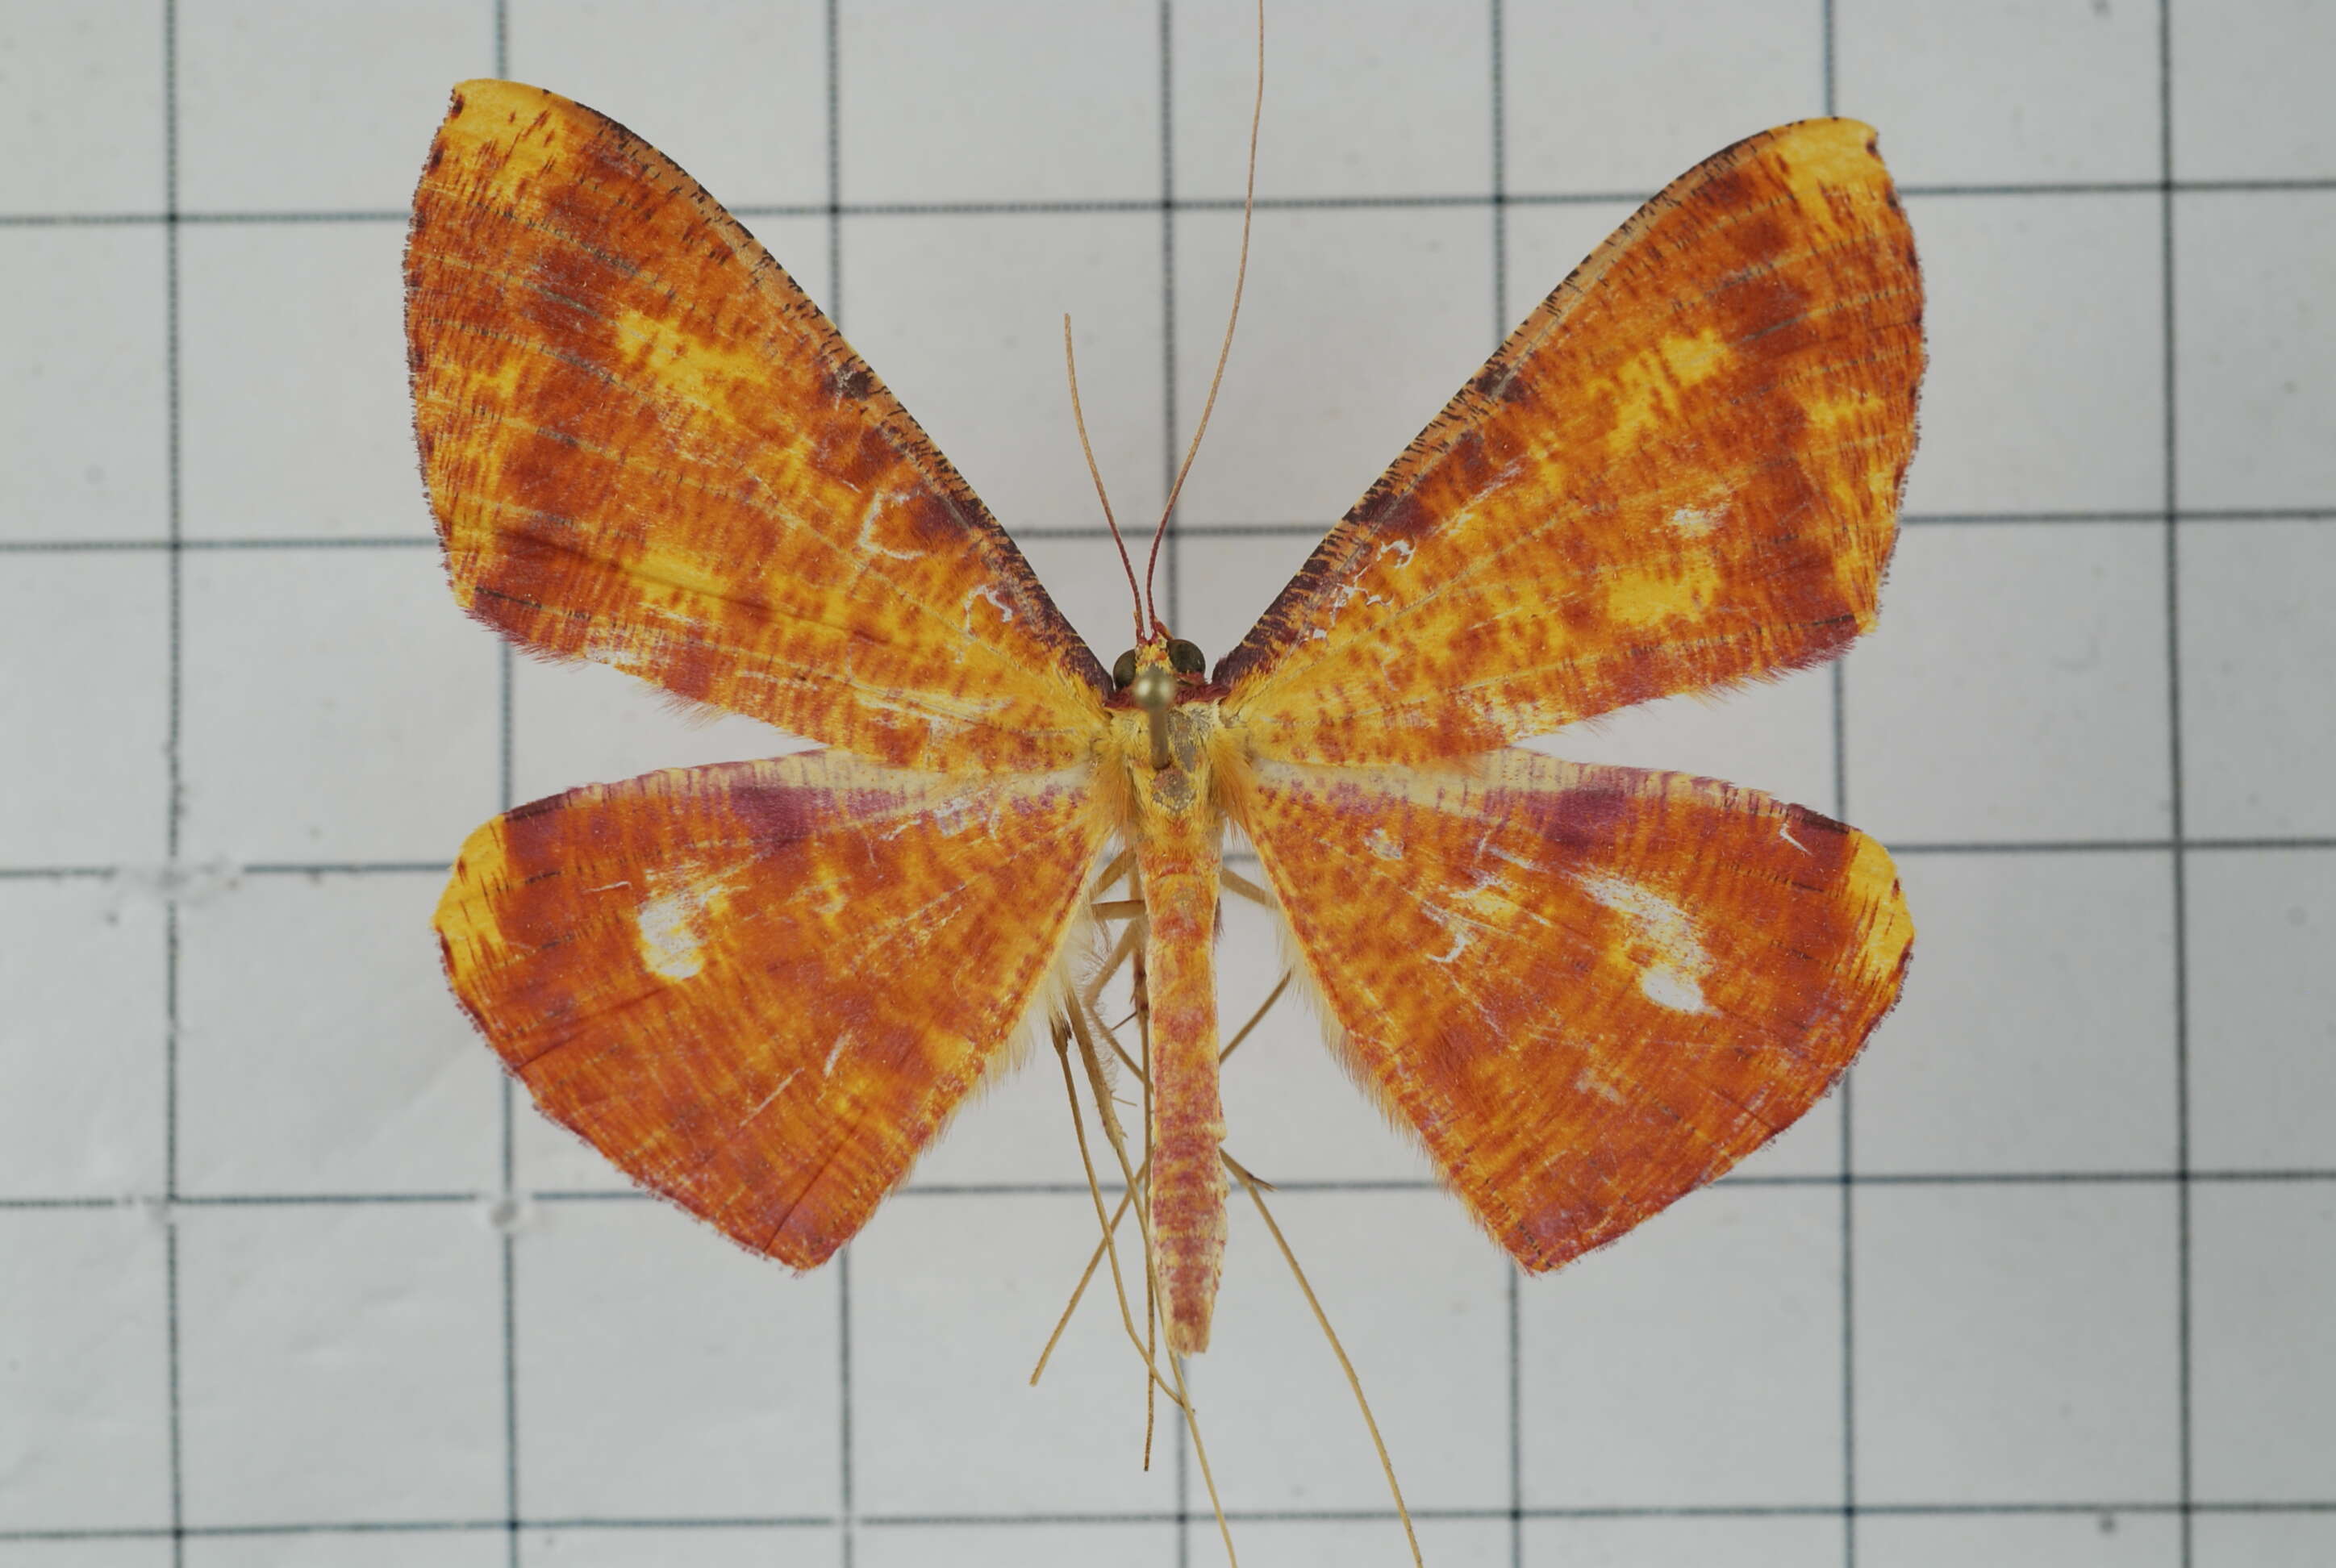 Image of Eumelea ludovicata Guenée 1858